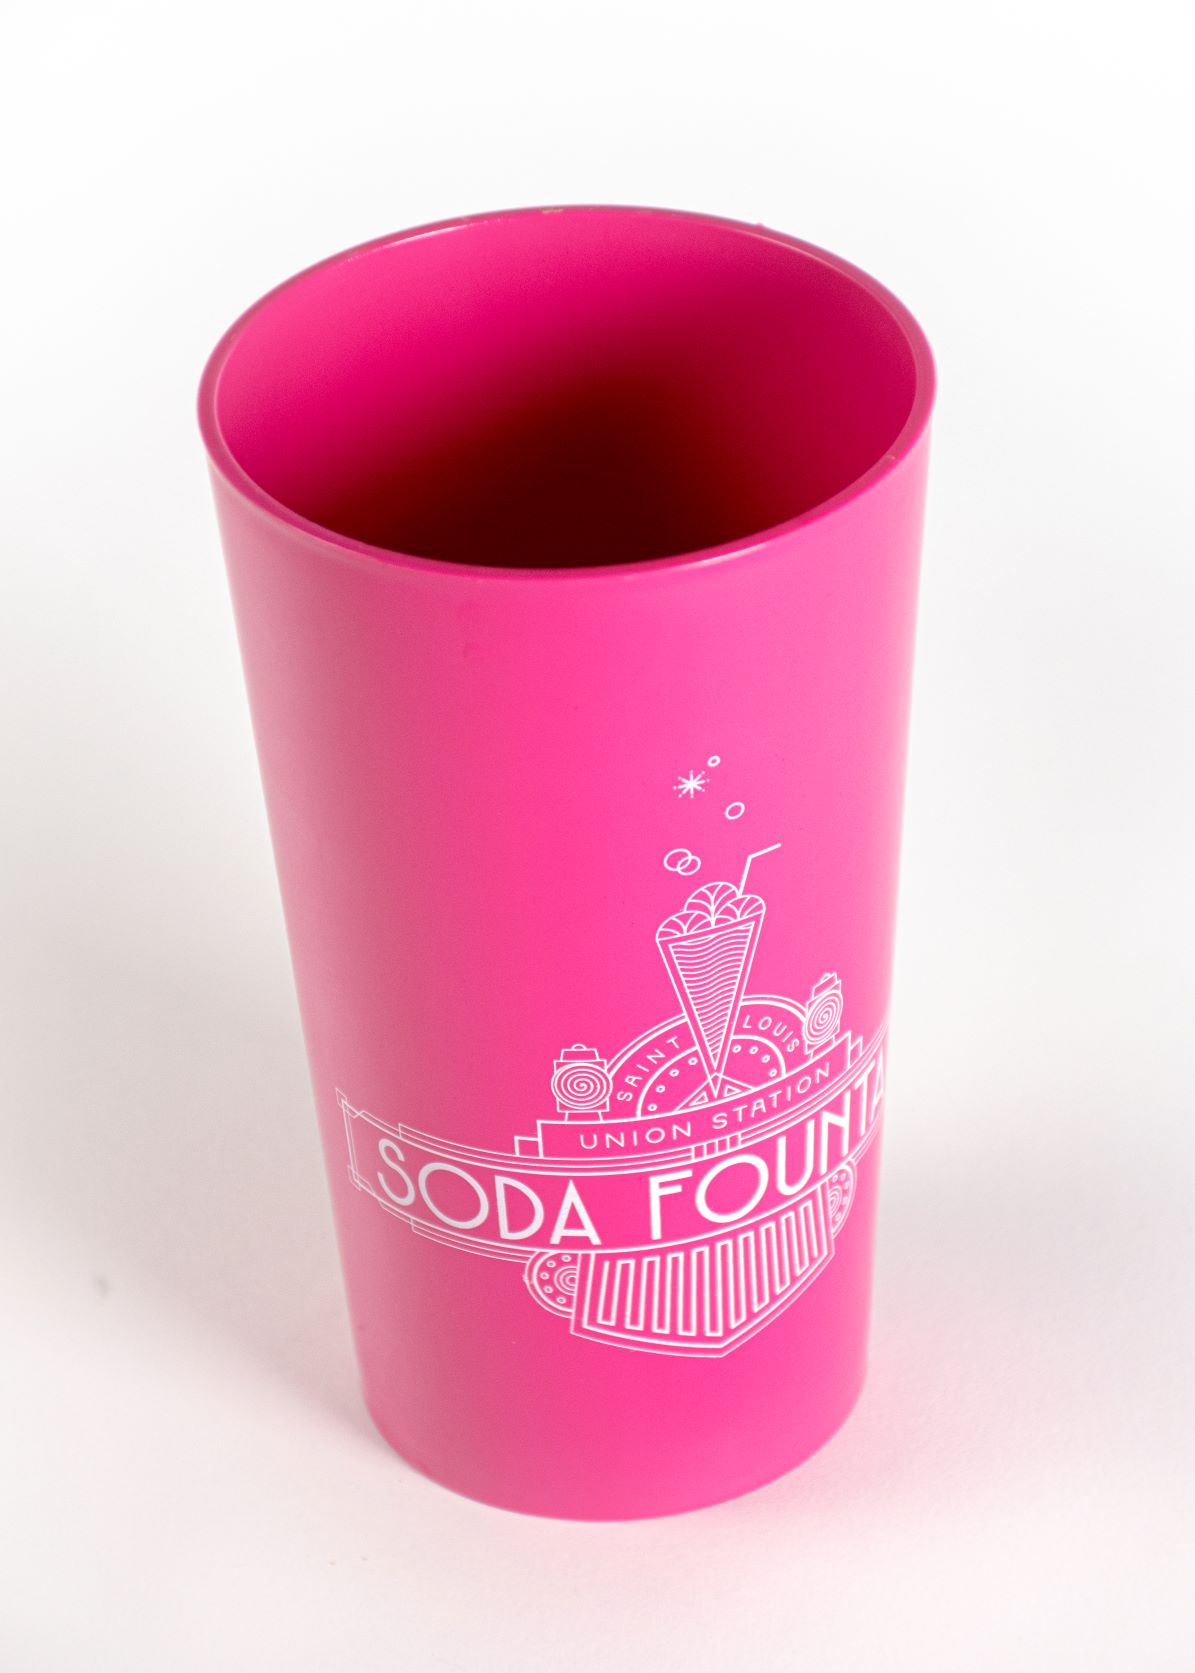 Pink Soda Fountain Plastic Cup The Soda Fountain